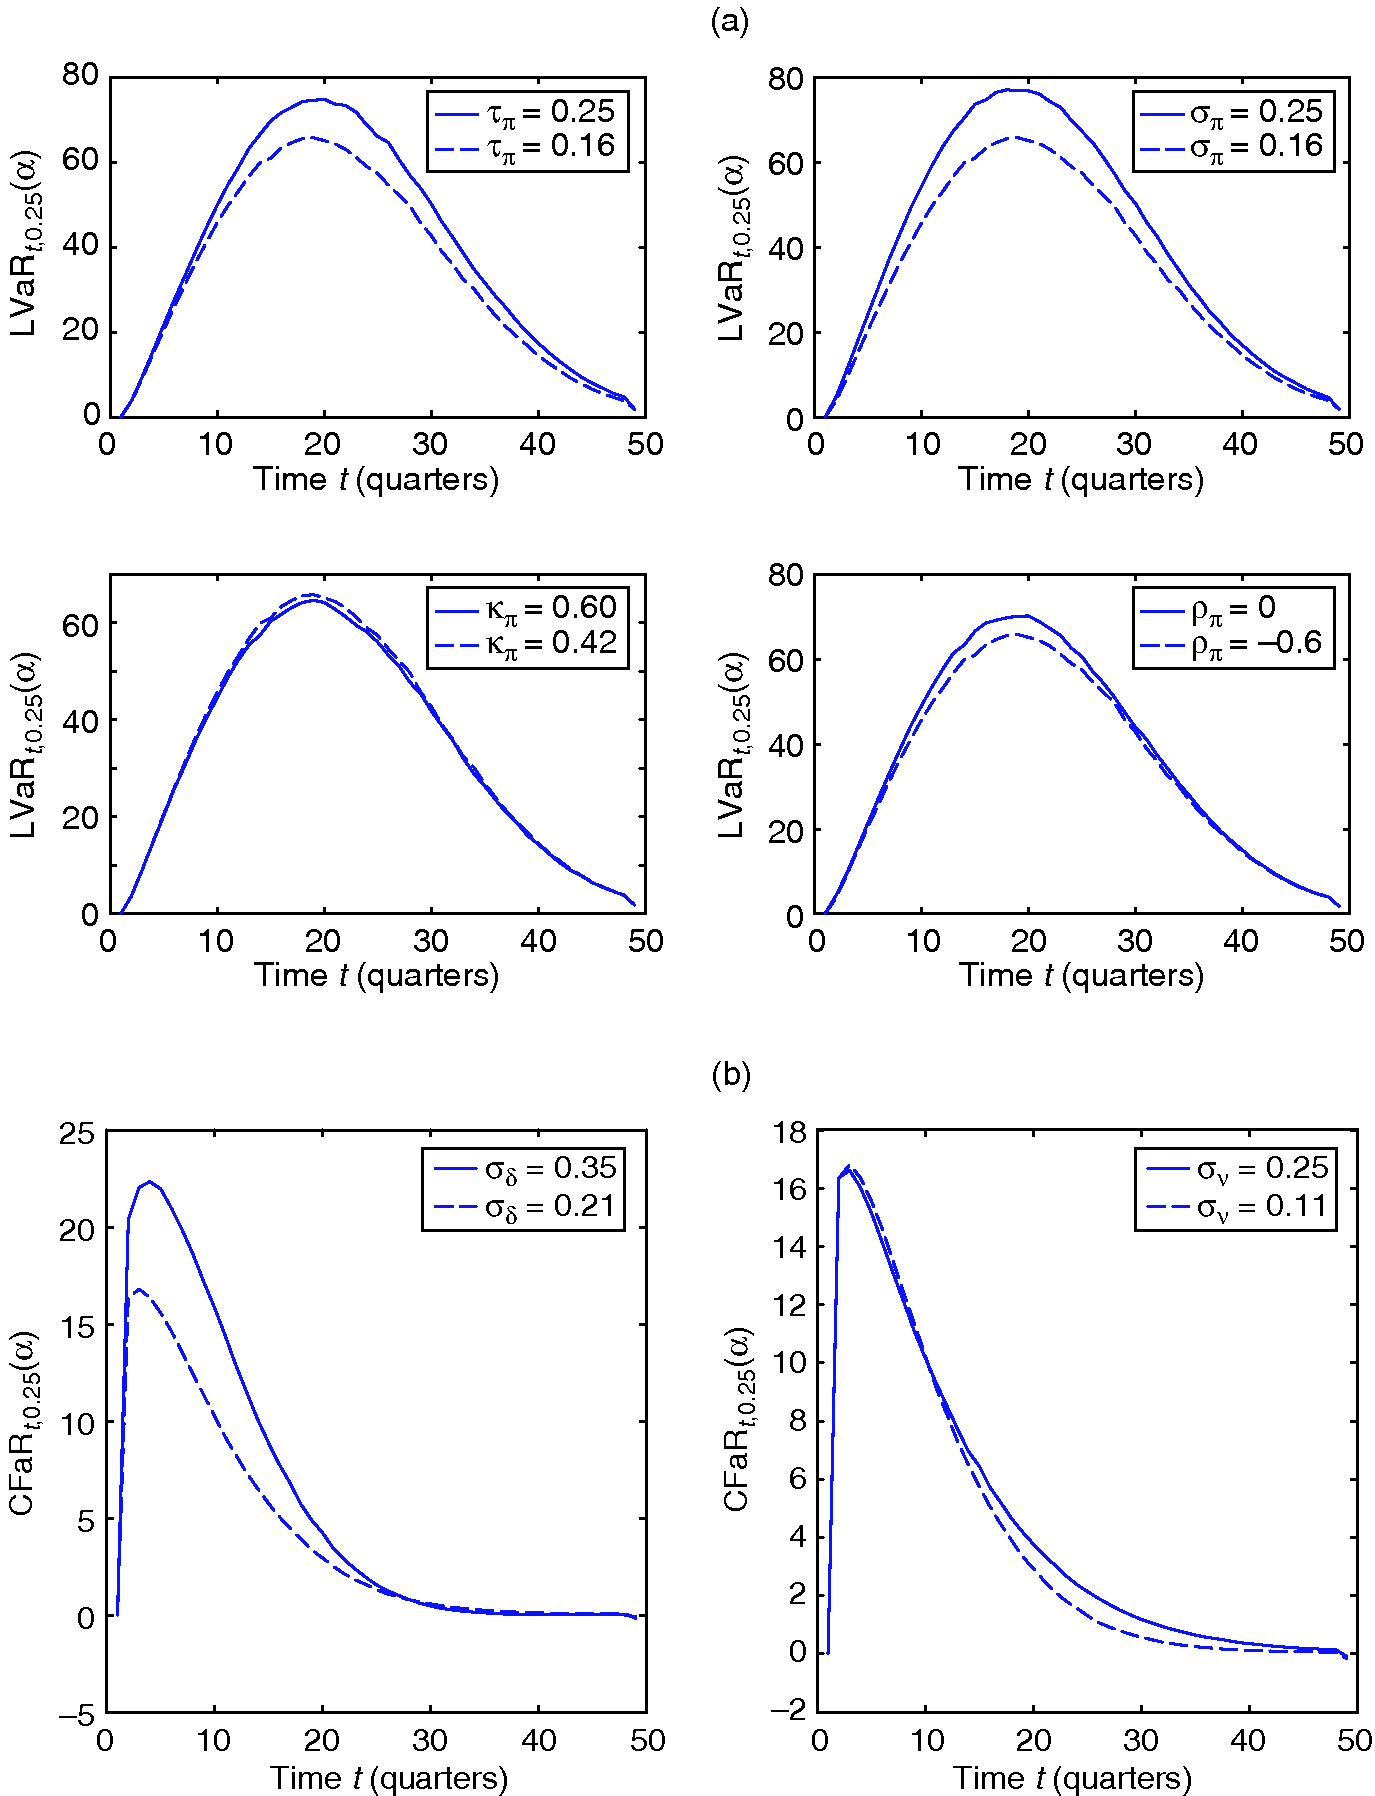 Figure 4: Sensitivity analysis for (a) LVaR and (b) CFaR